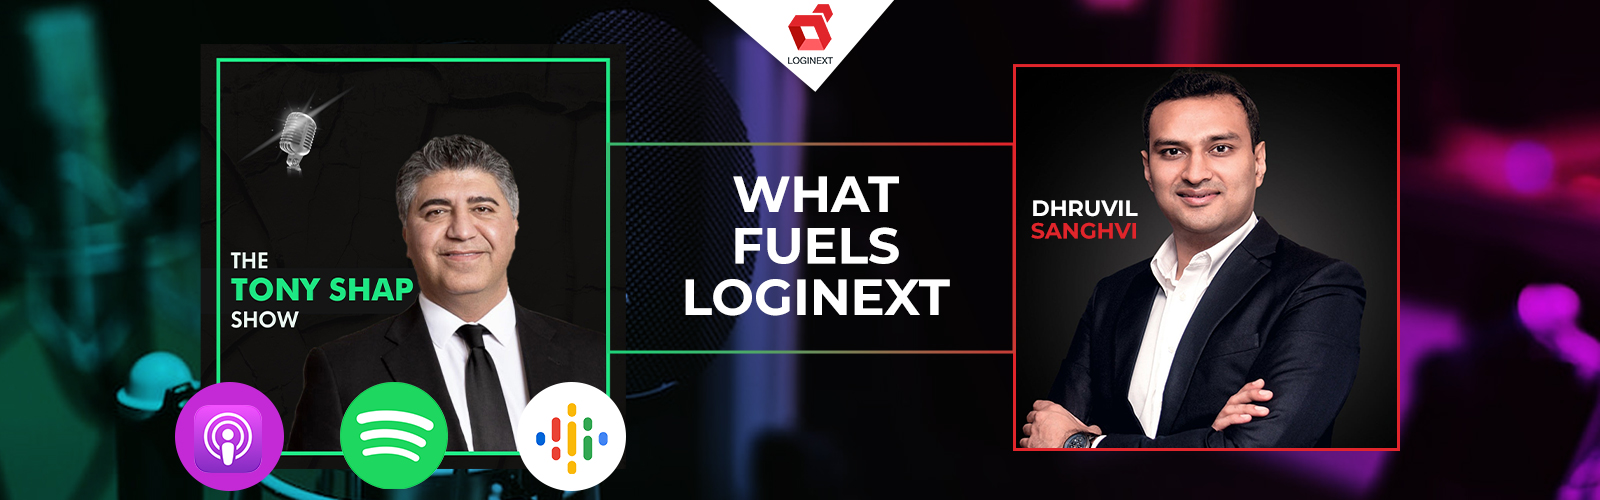 Catch LogiNext CEO, Dhruvil Sanghvi on the Tony Shap Show!